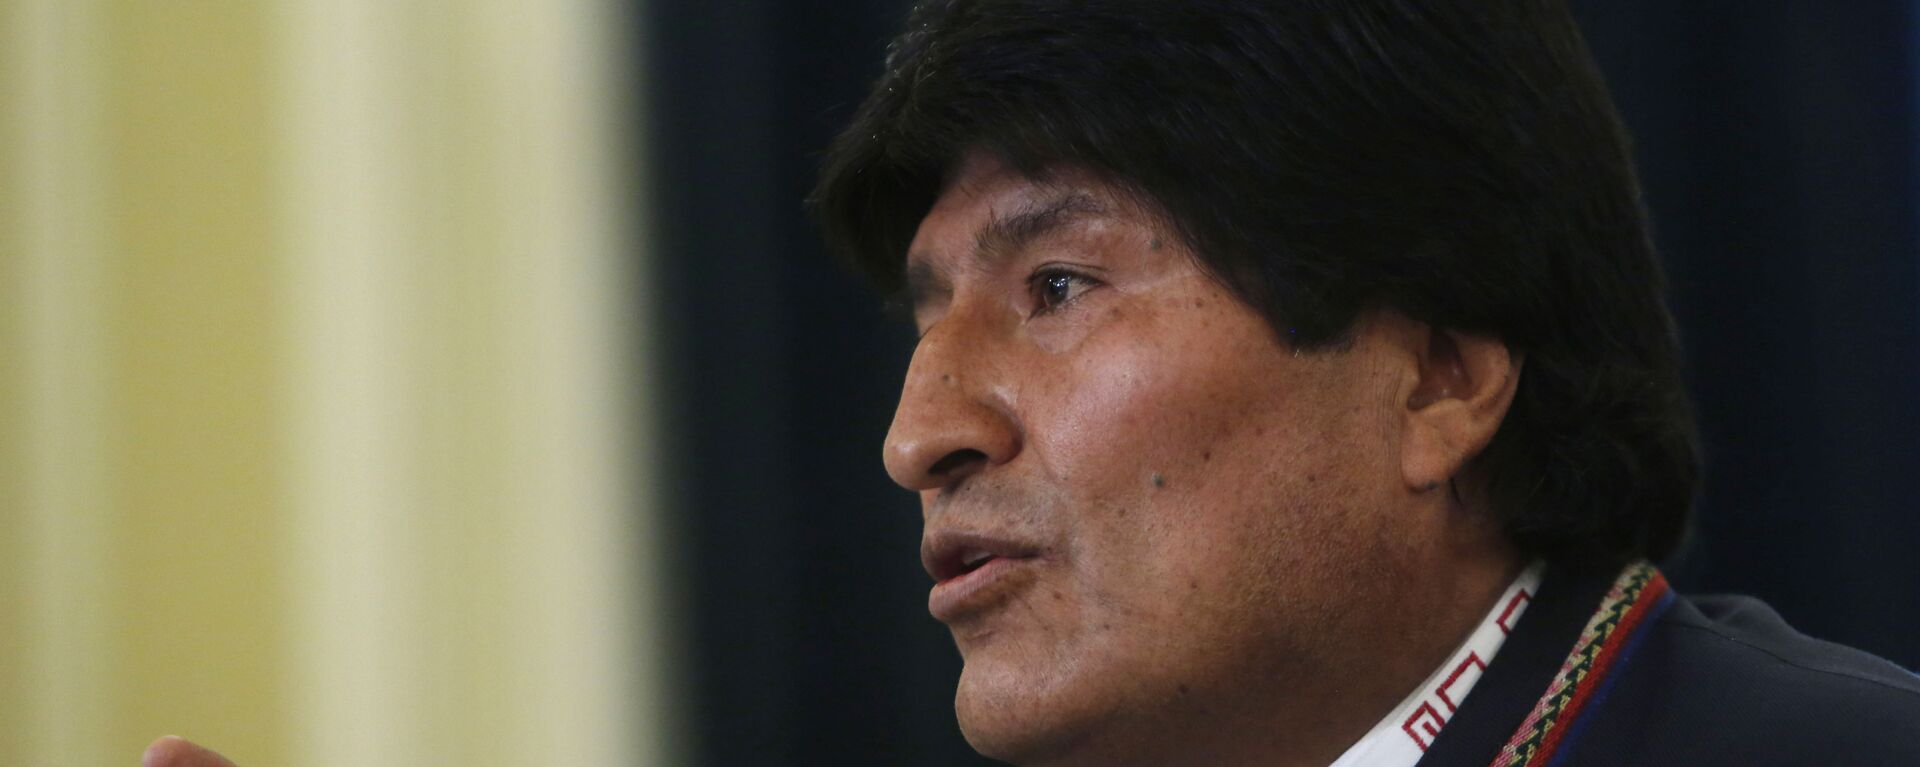 Evo Morales, el presidente de Bolivia (archivo) - Sputnik Mundo, 1920, 08.07.2019